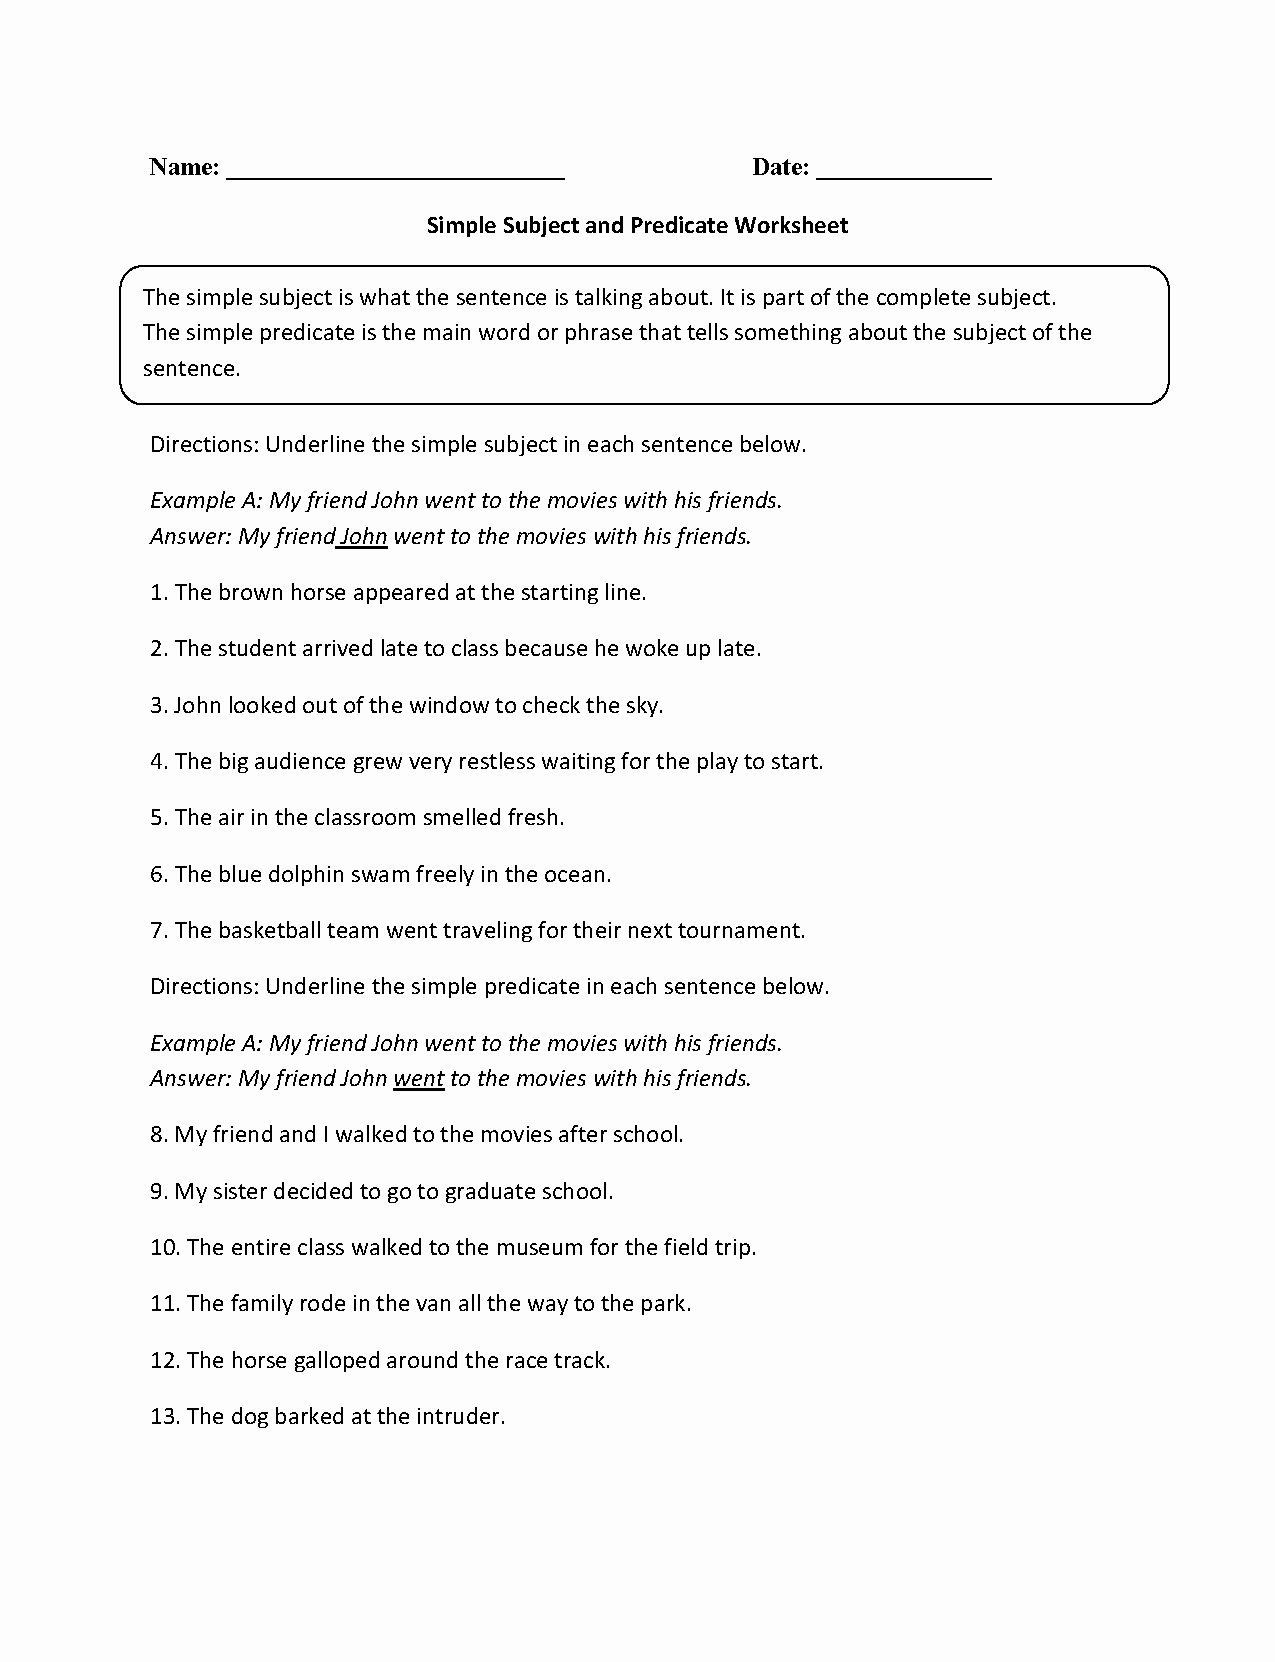 Subjects and Predicates Worksheet Beautiful Simple Subject and Predicate Worksheet